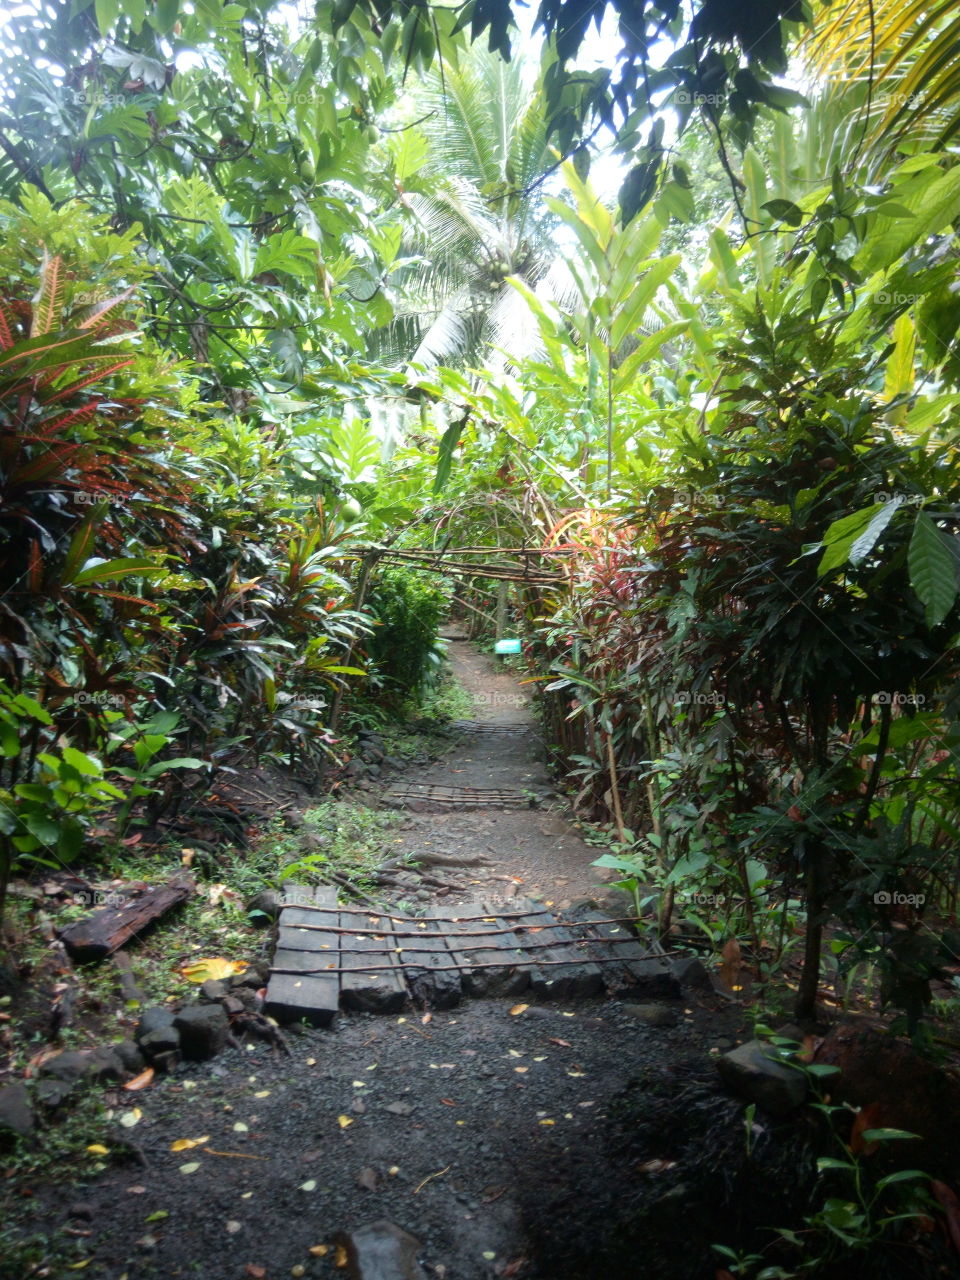 Tropic Trail